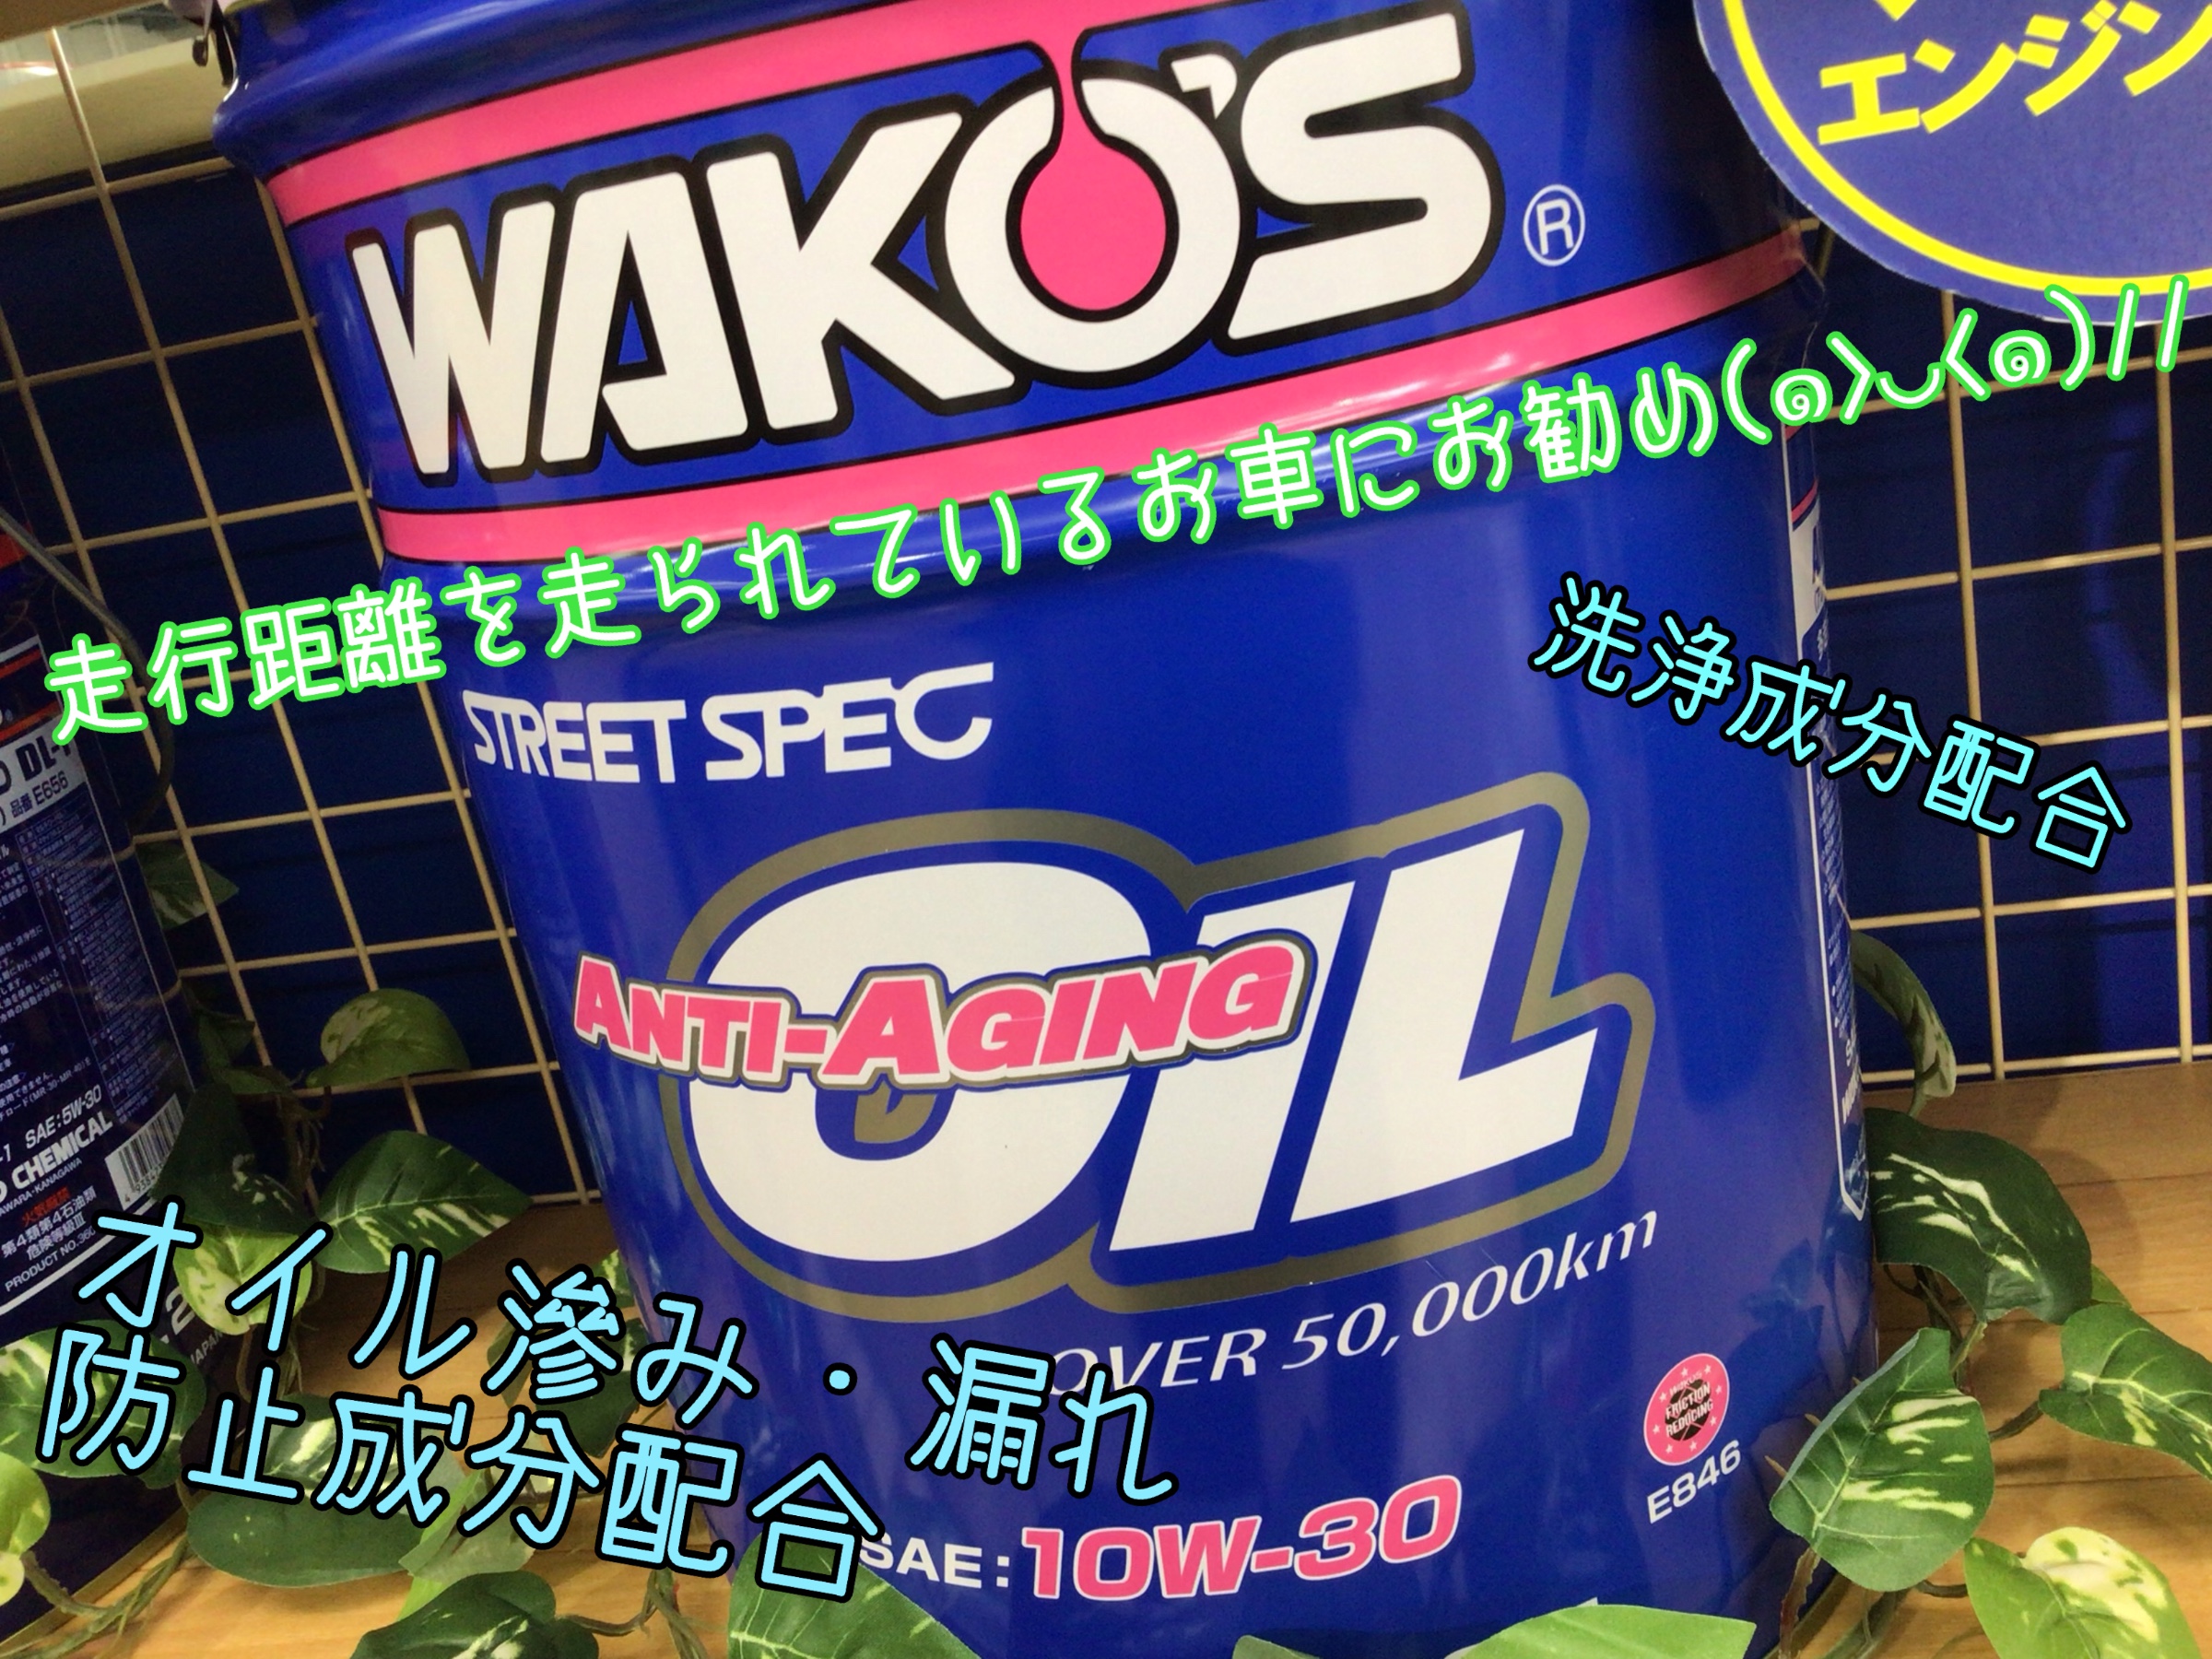 ◇【WAKO'S:ANTI-AGING OIL】のご紹介(≧∀≦)// | メンテナンス商品 ...